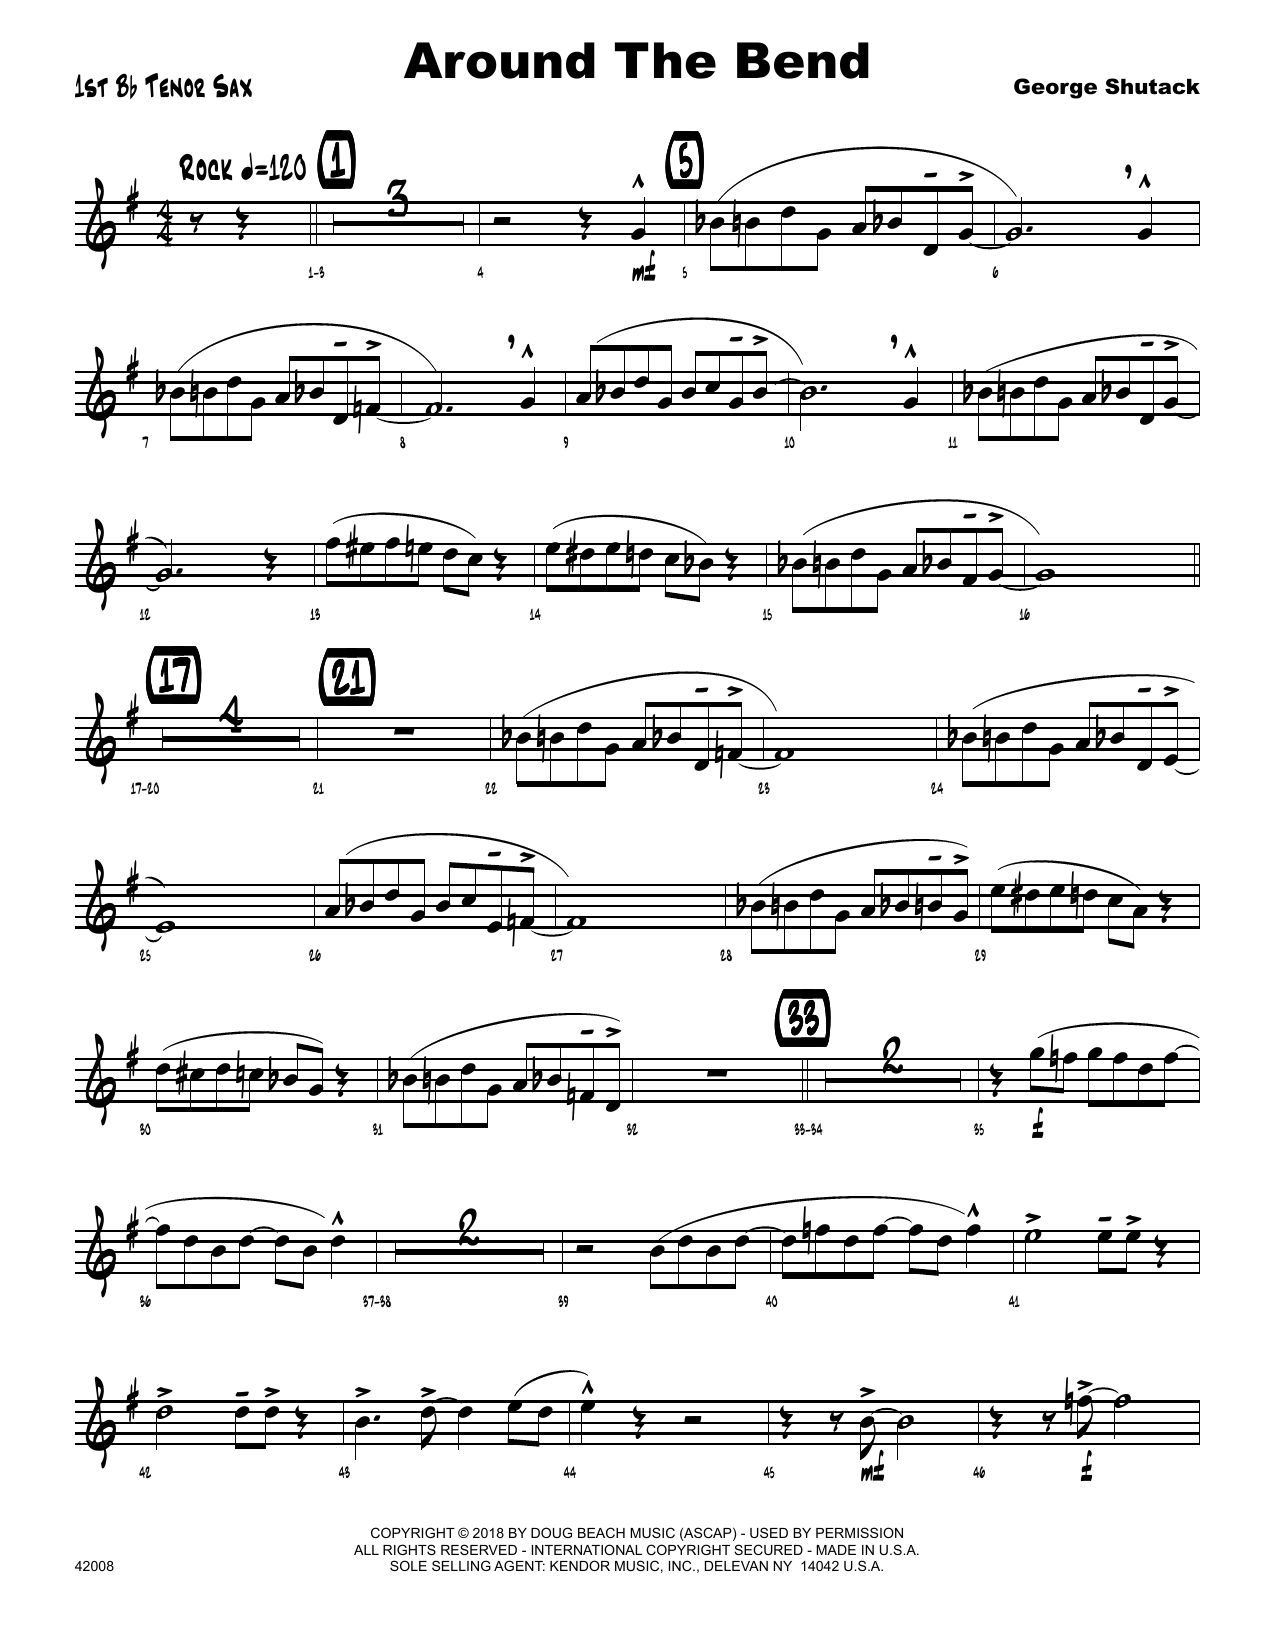 Download George Shutack Around The Bend - 1st Tenor Saxophone Sheet Music